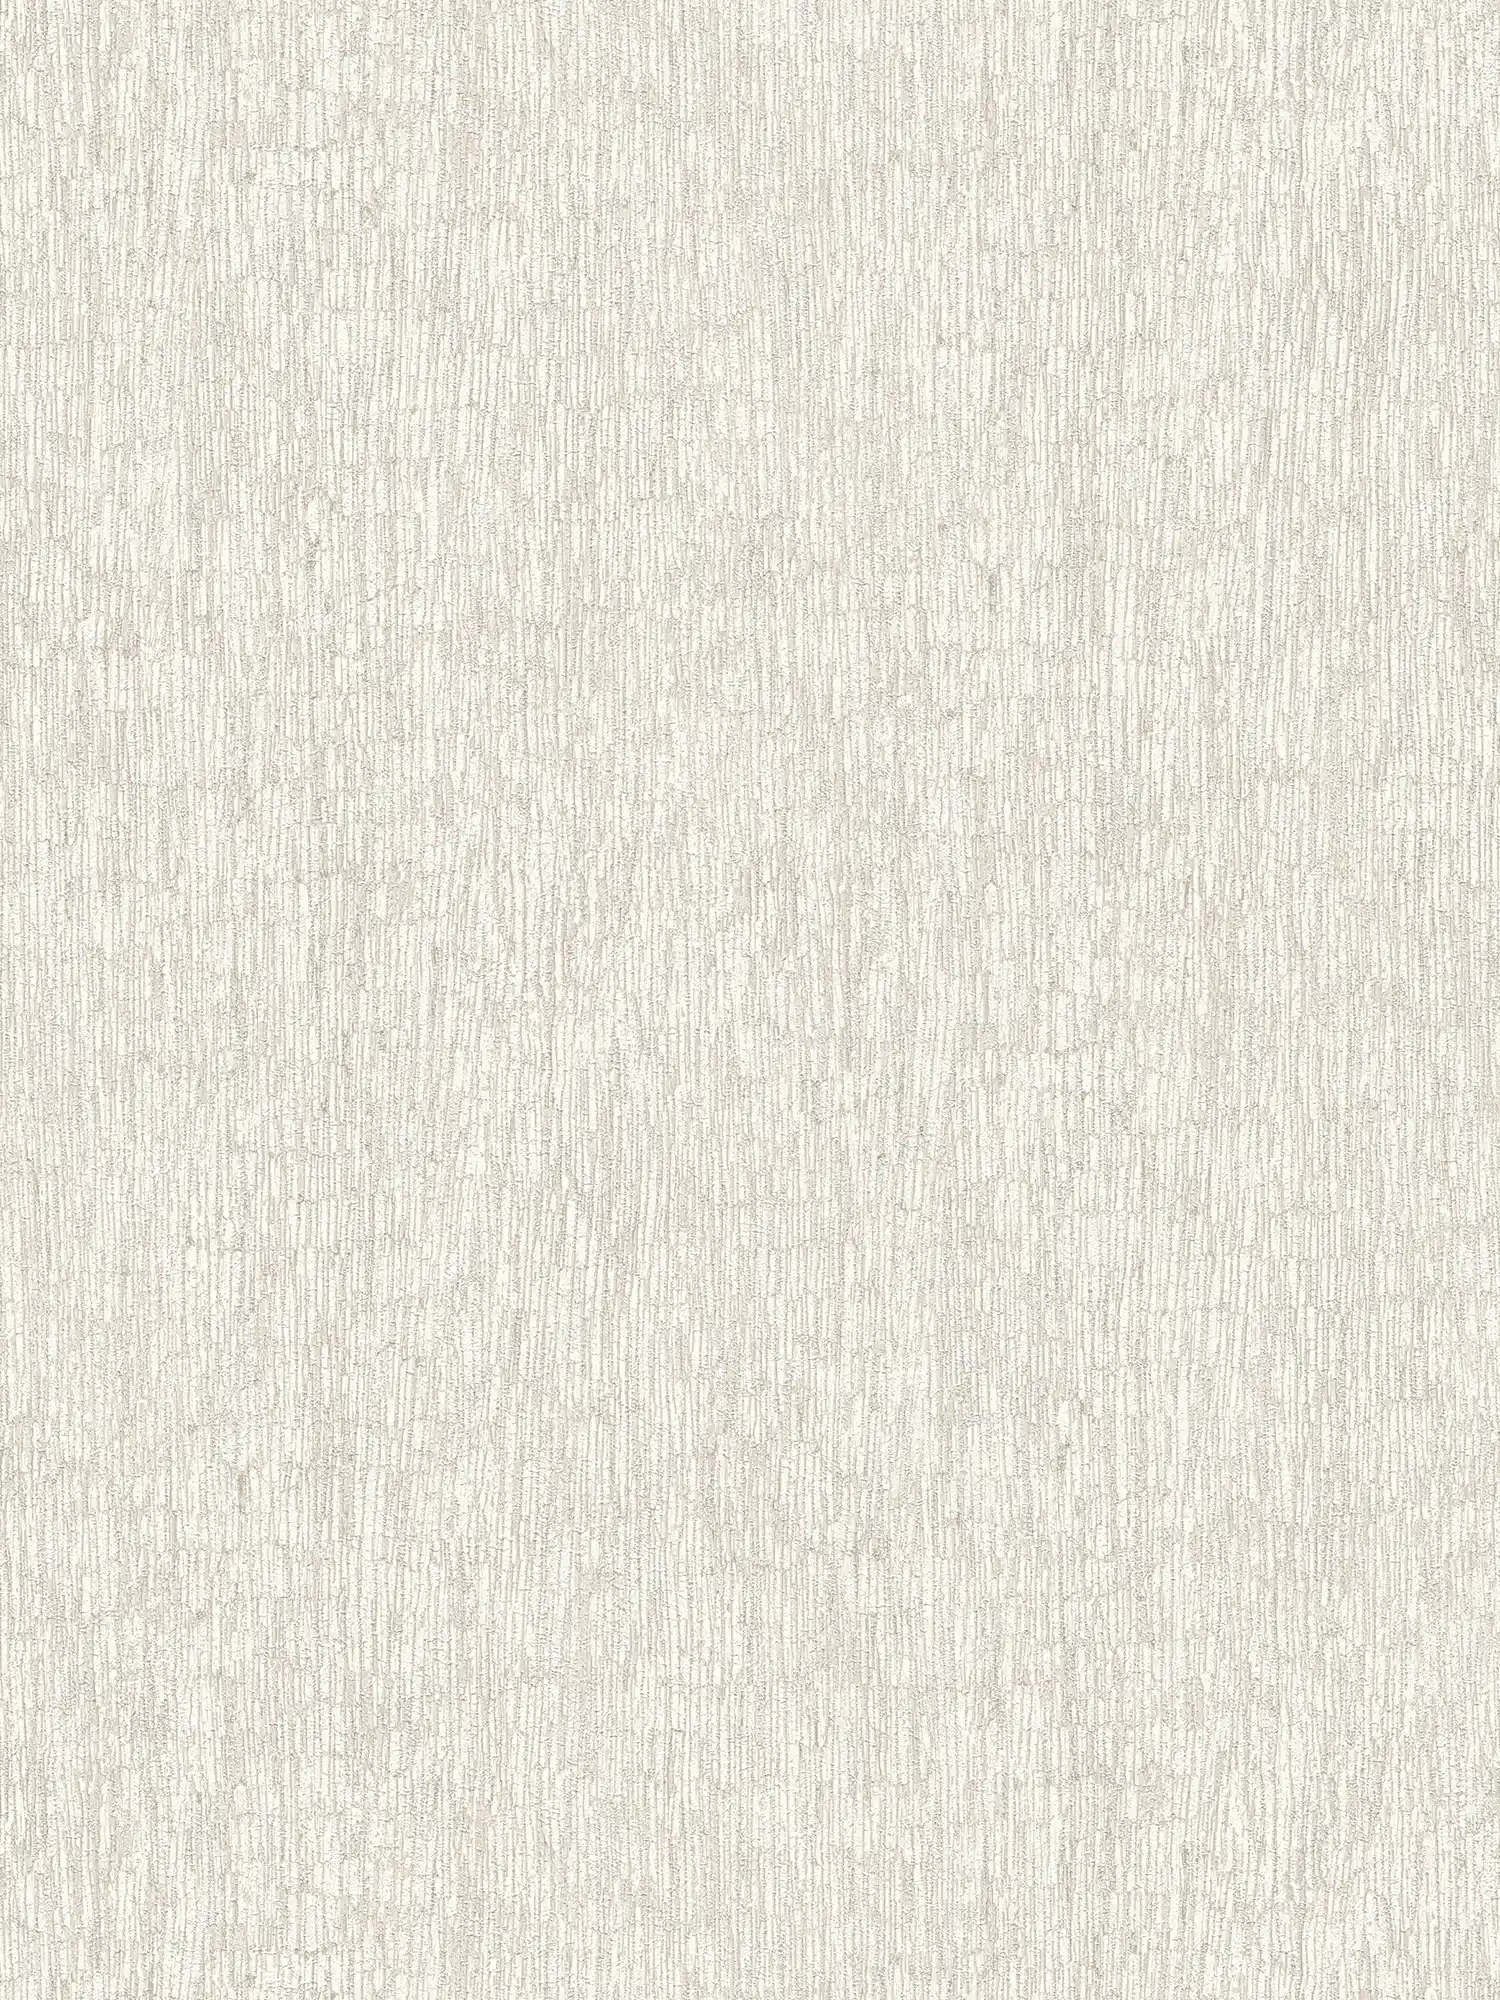 Papel pintado no tejido de aspecto textil, ligeramente brillante - blanco, gris, plata
